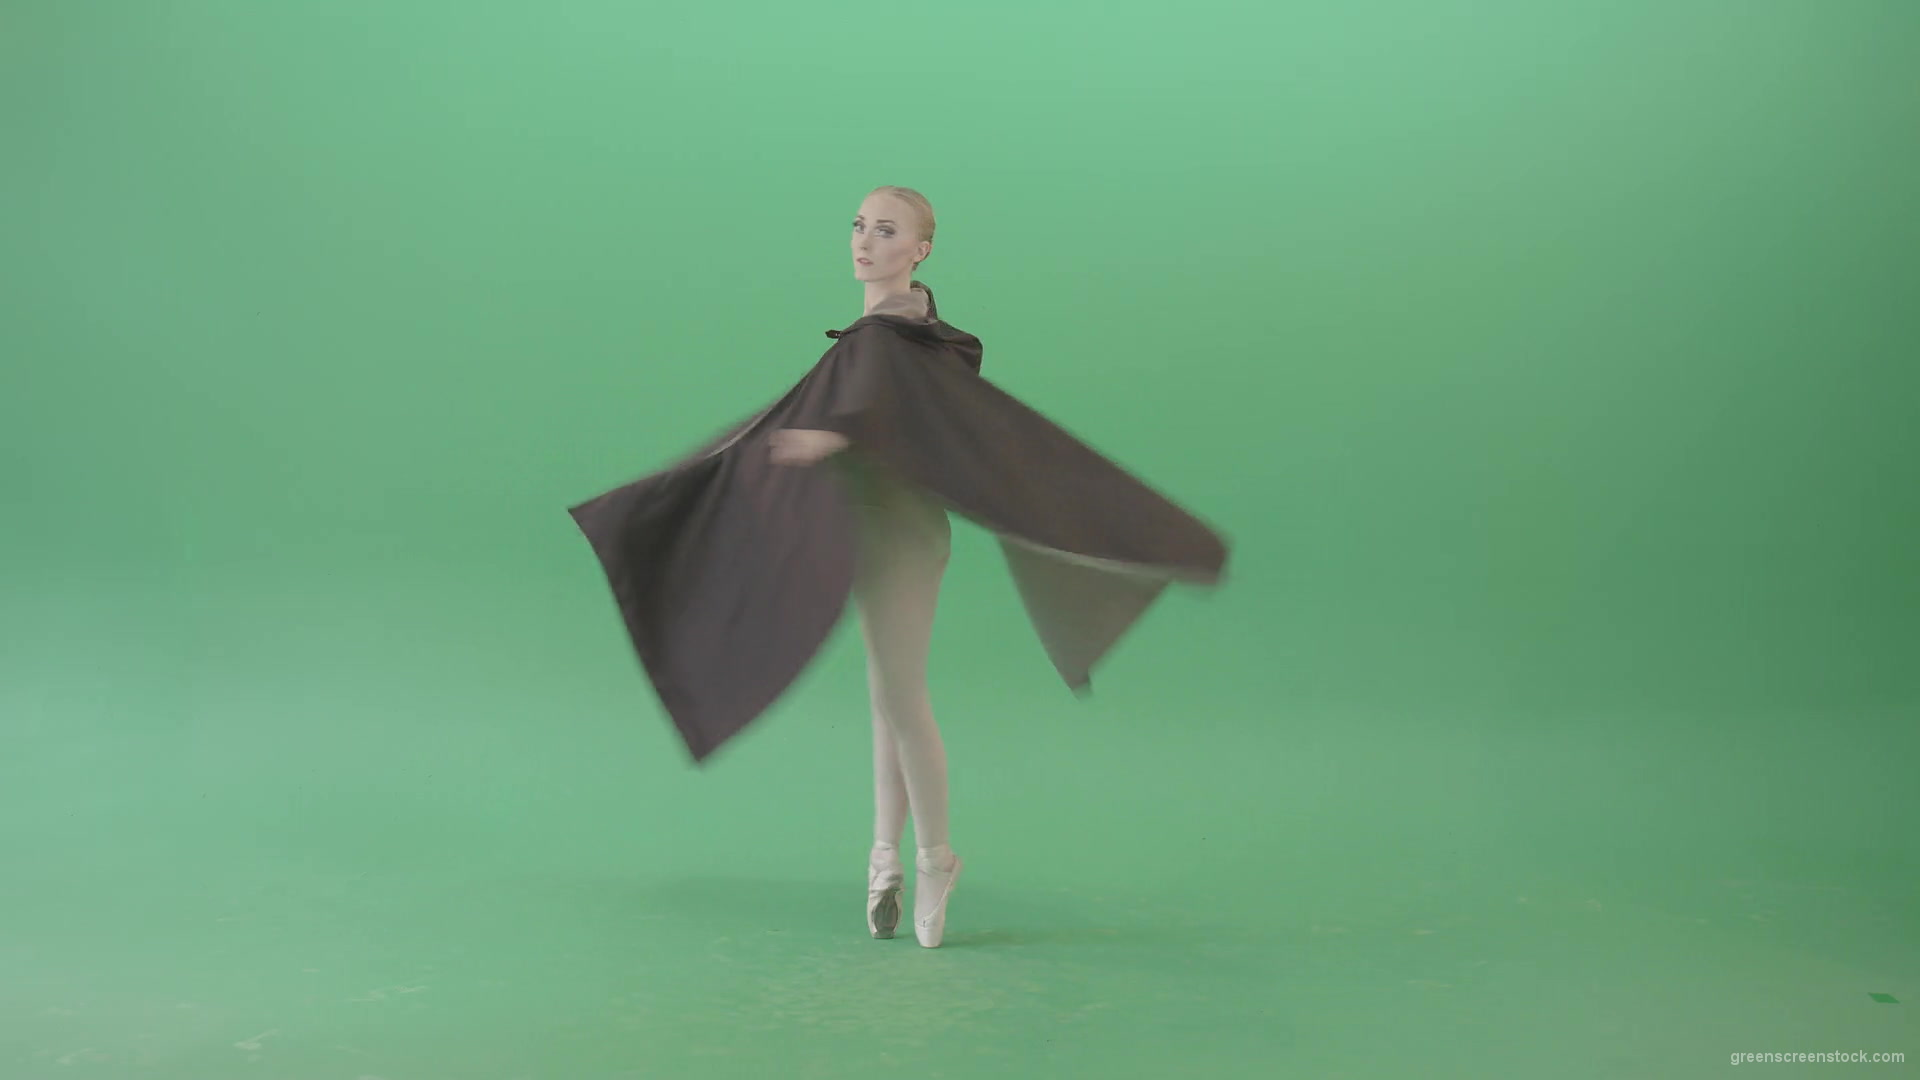 Green-Screen-Ballet-Girl-spinning-in-black-Mantle-cloak-4K-Video-Footage-1920_005 Green Screen Stock